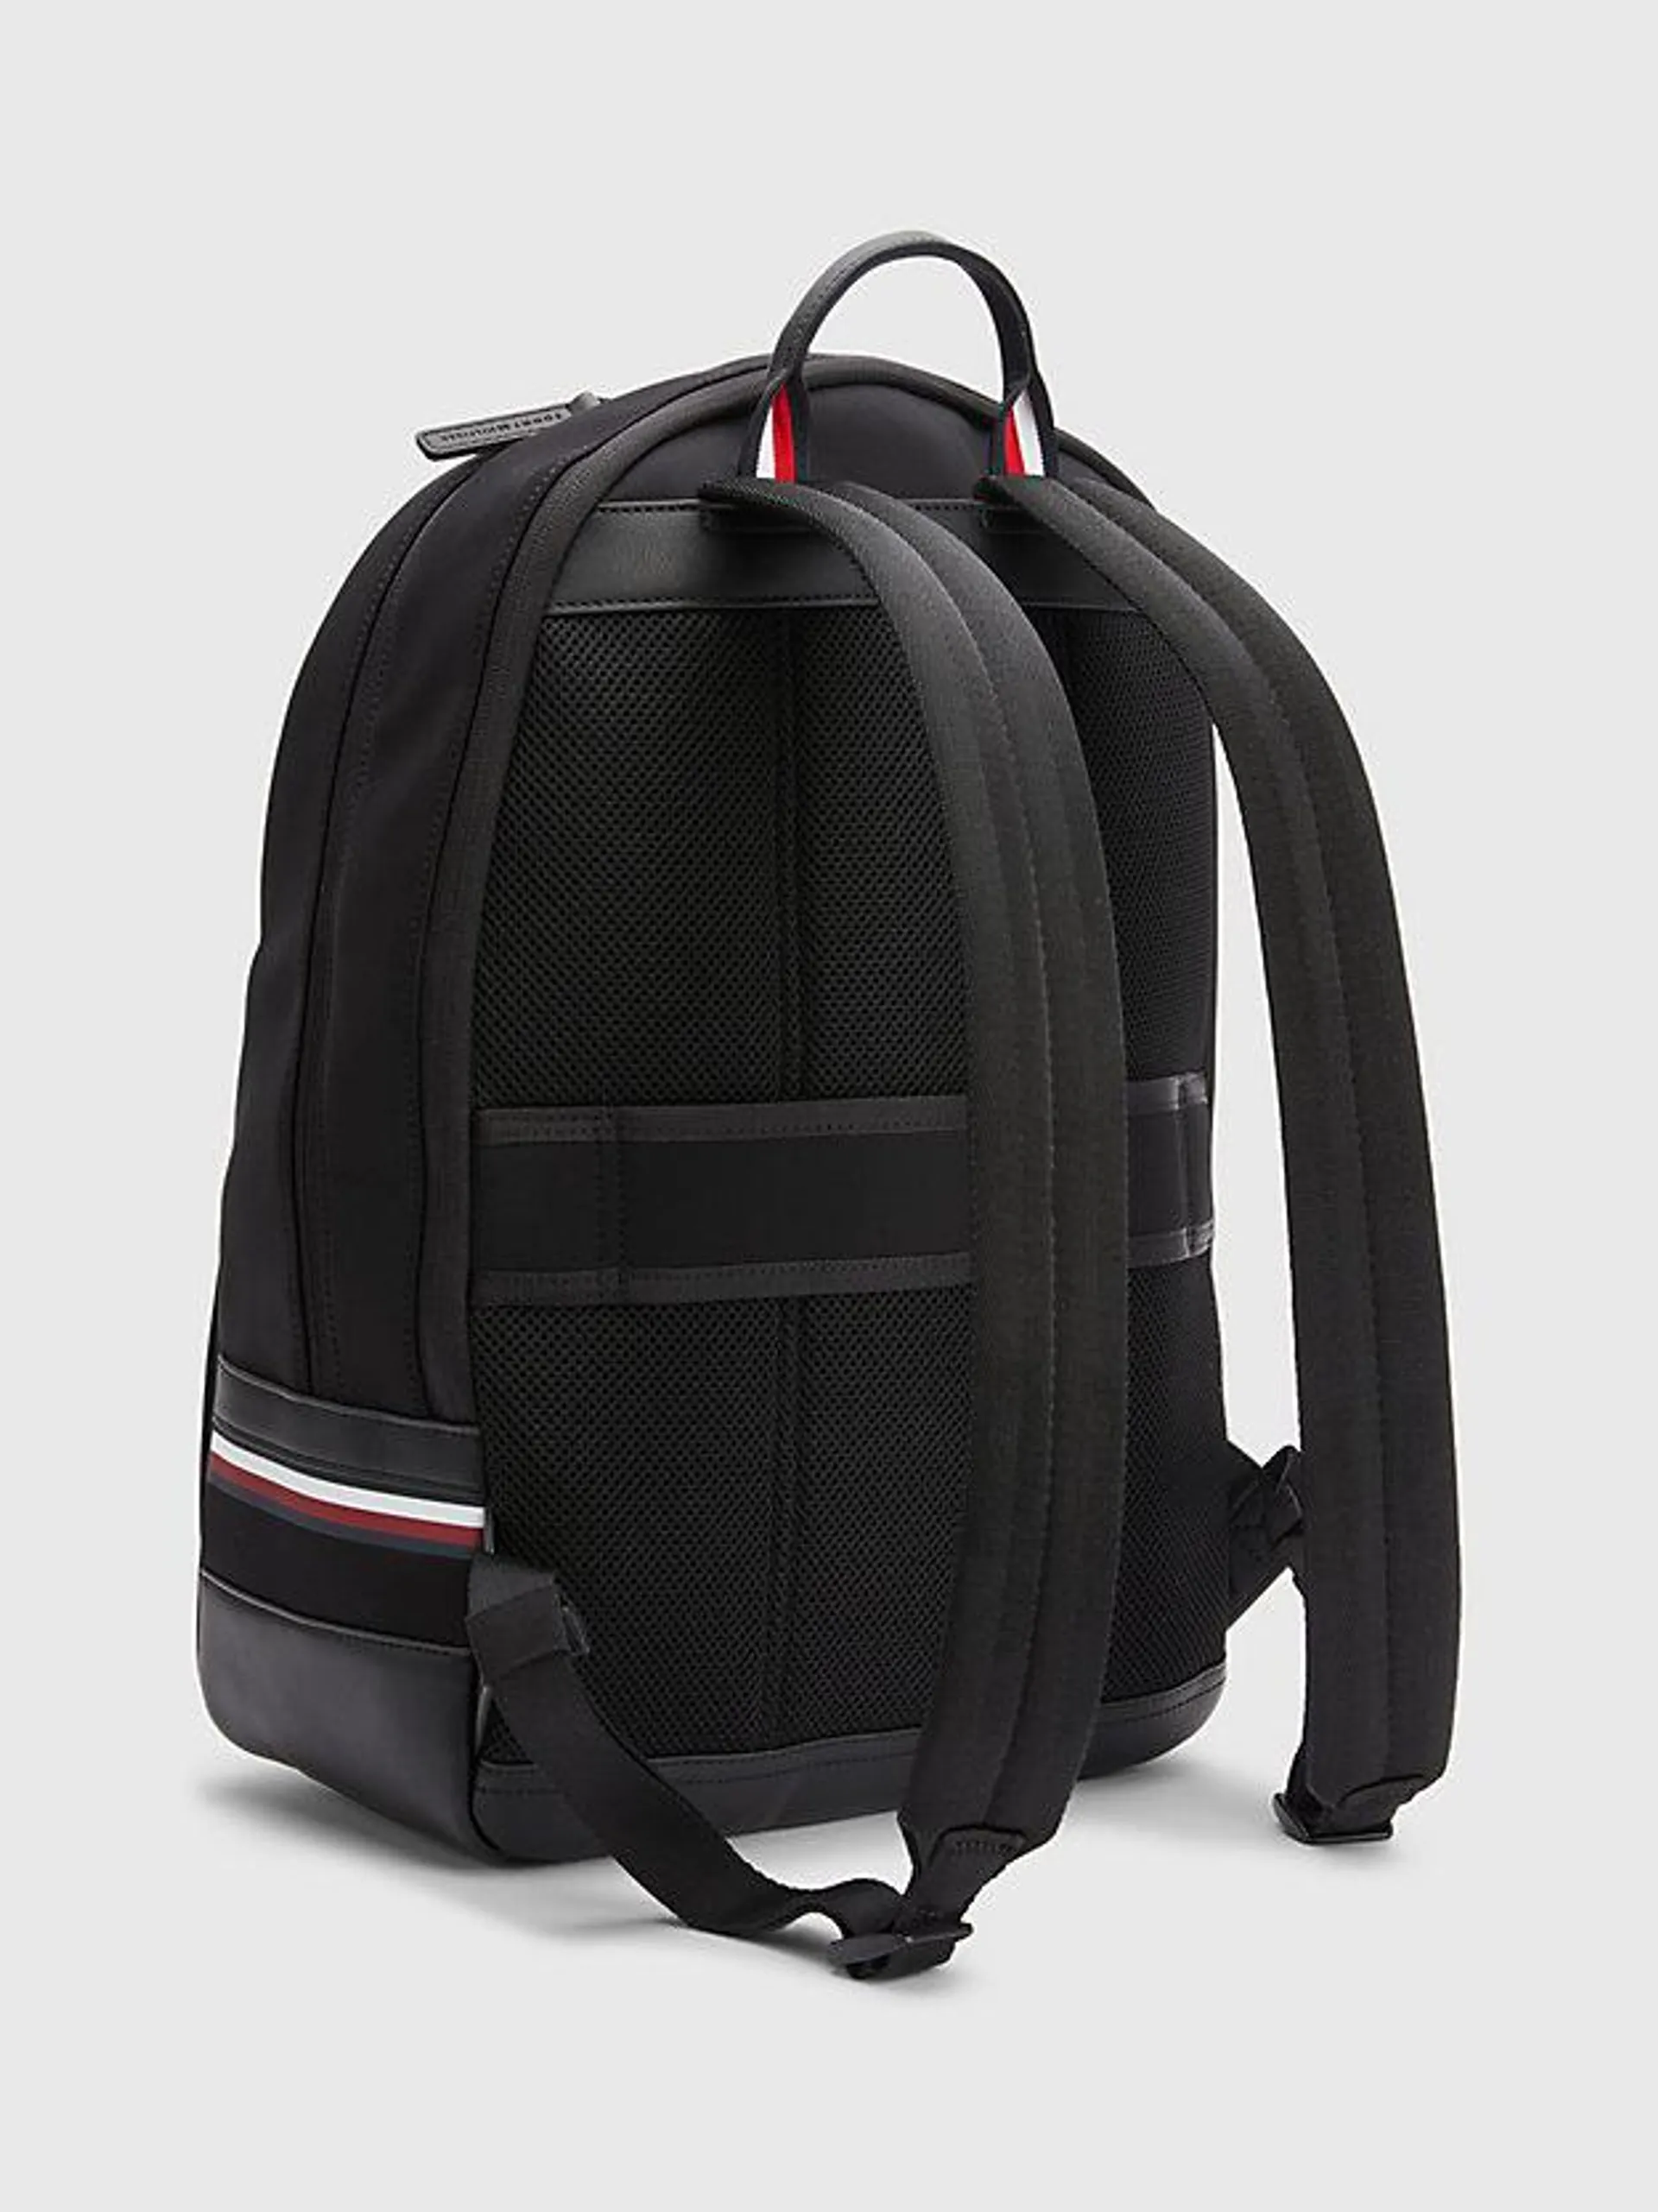 Urban Nylon Backpack